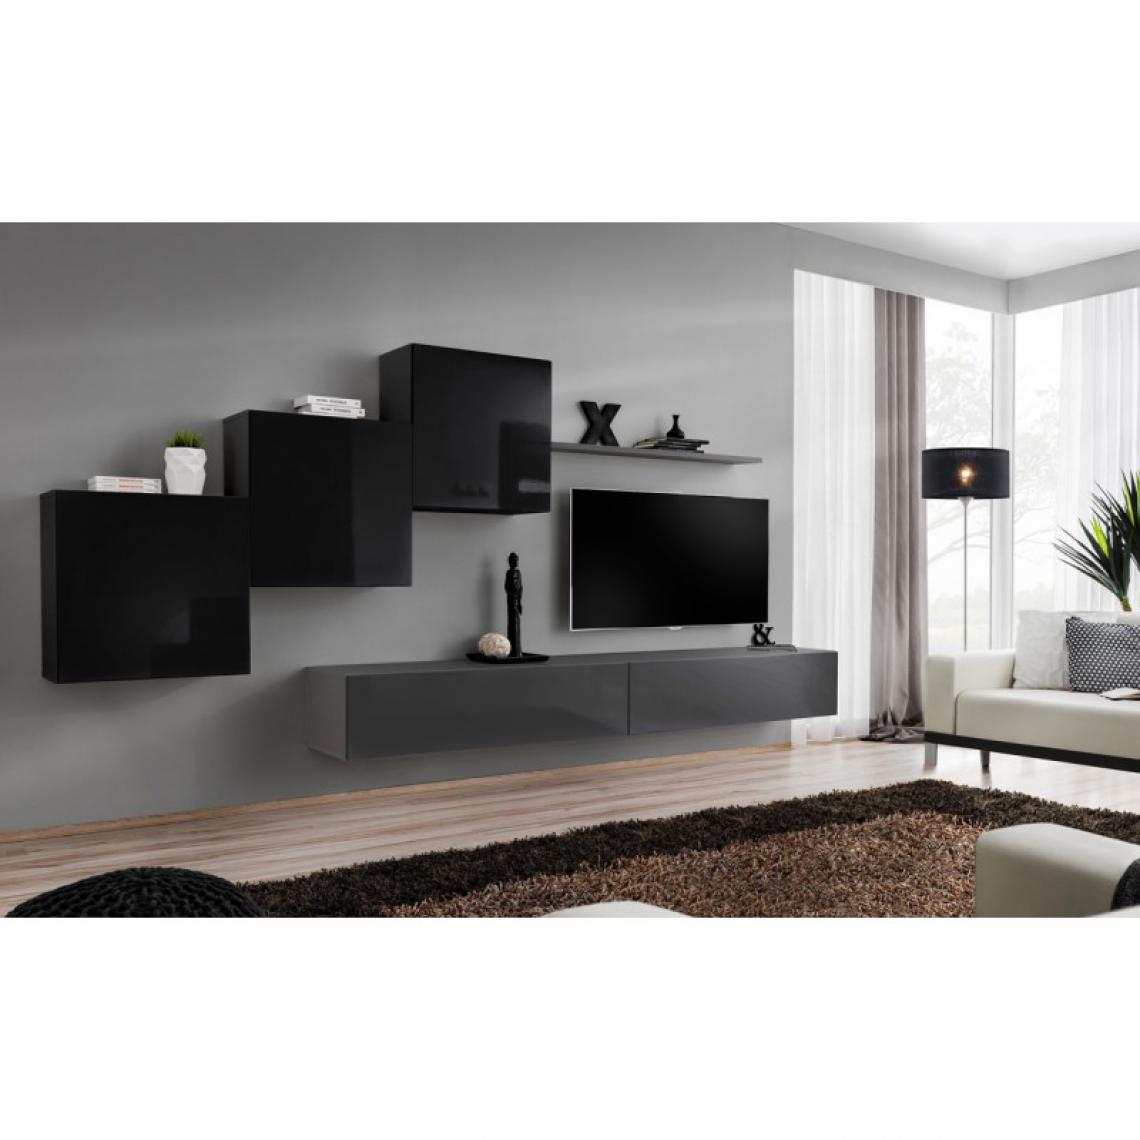 Ac-Deco - Meuble TV Mural Design Switch X 330cm Noir & Gris - Meubles TV, Hi-Fi